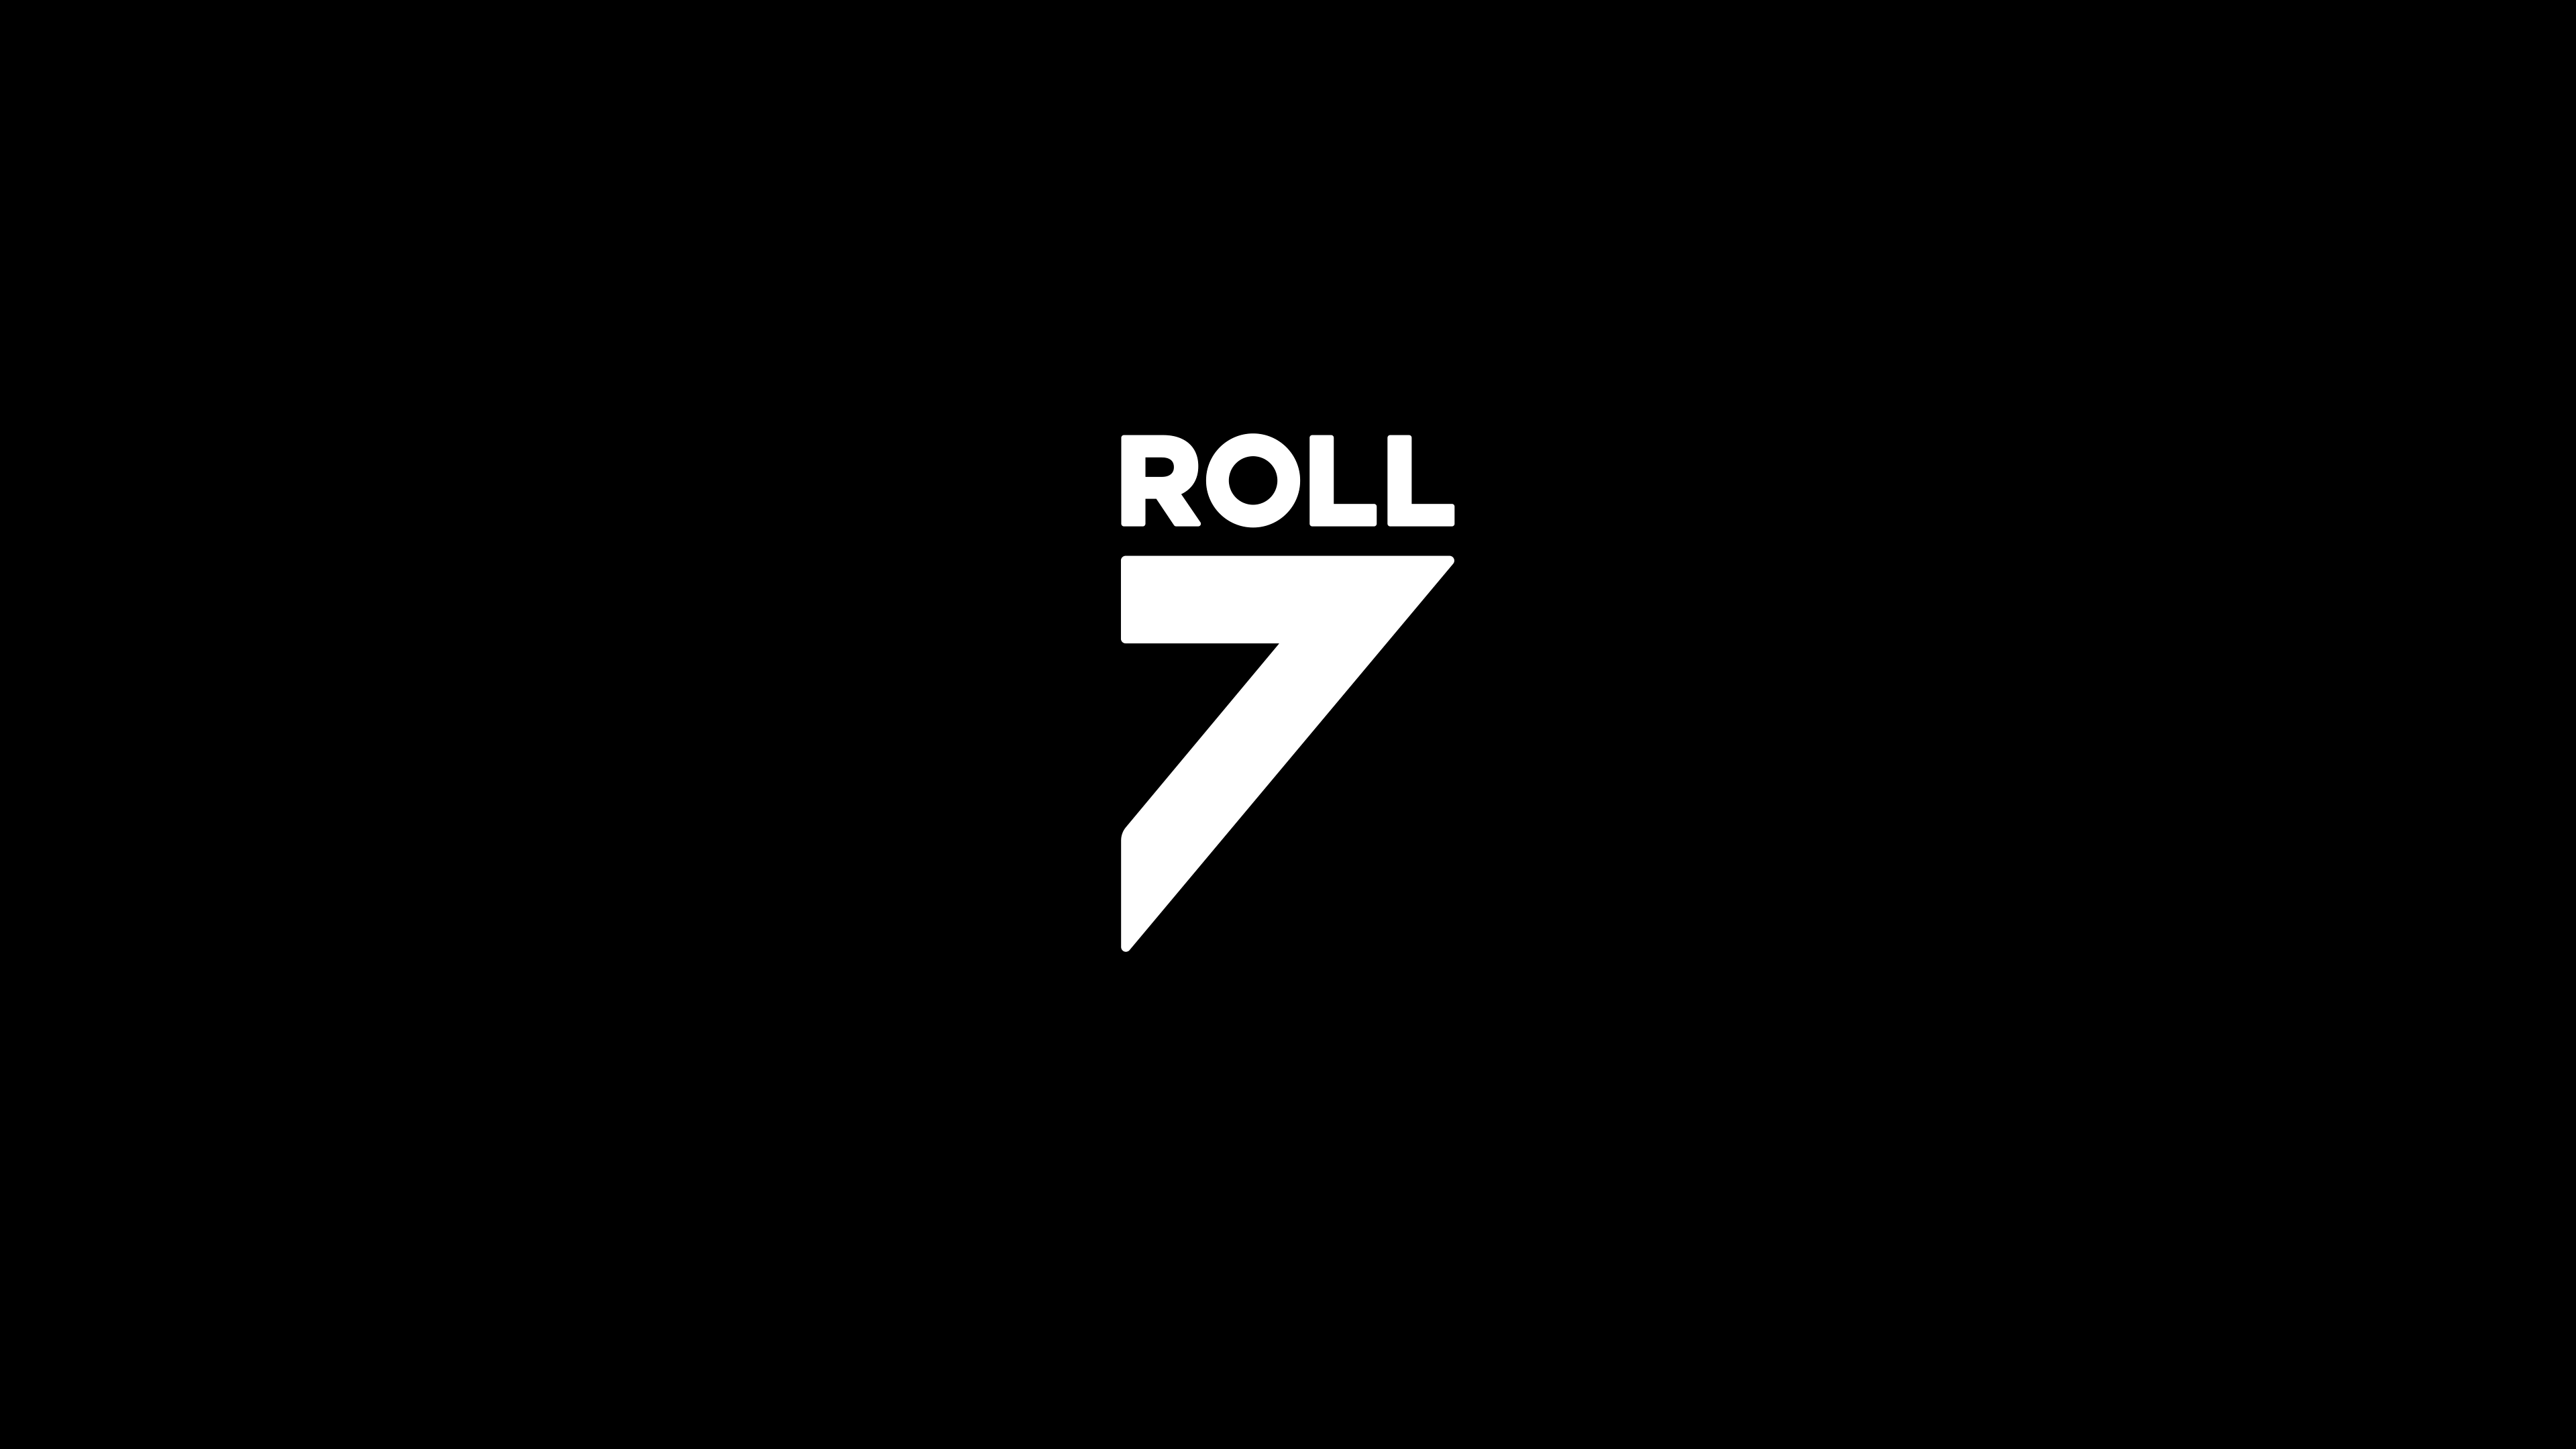 Roll7 Logo Image